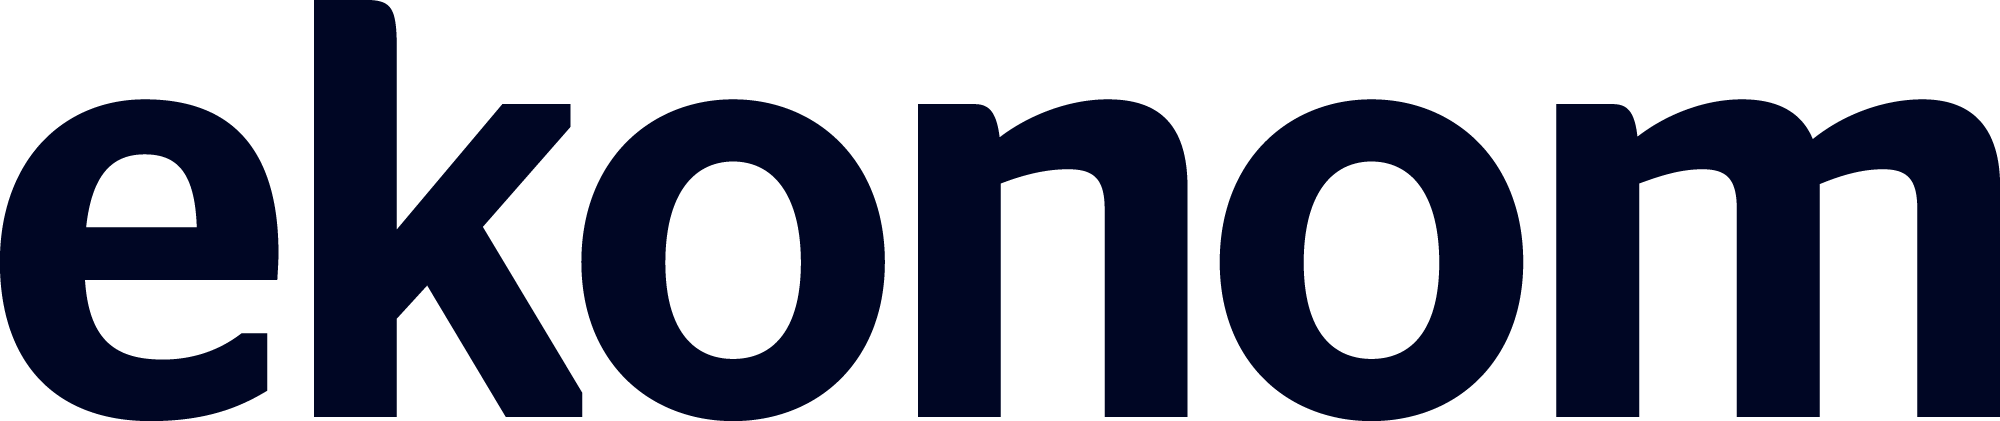 logo_ekonom